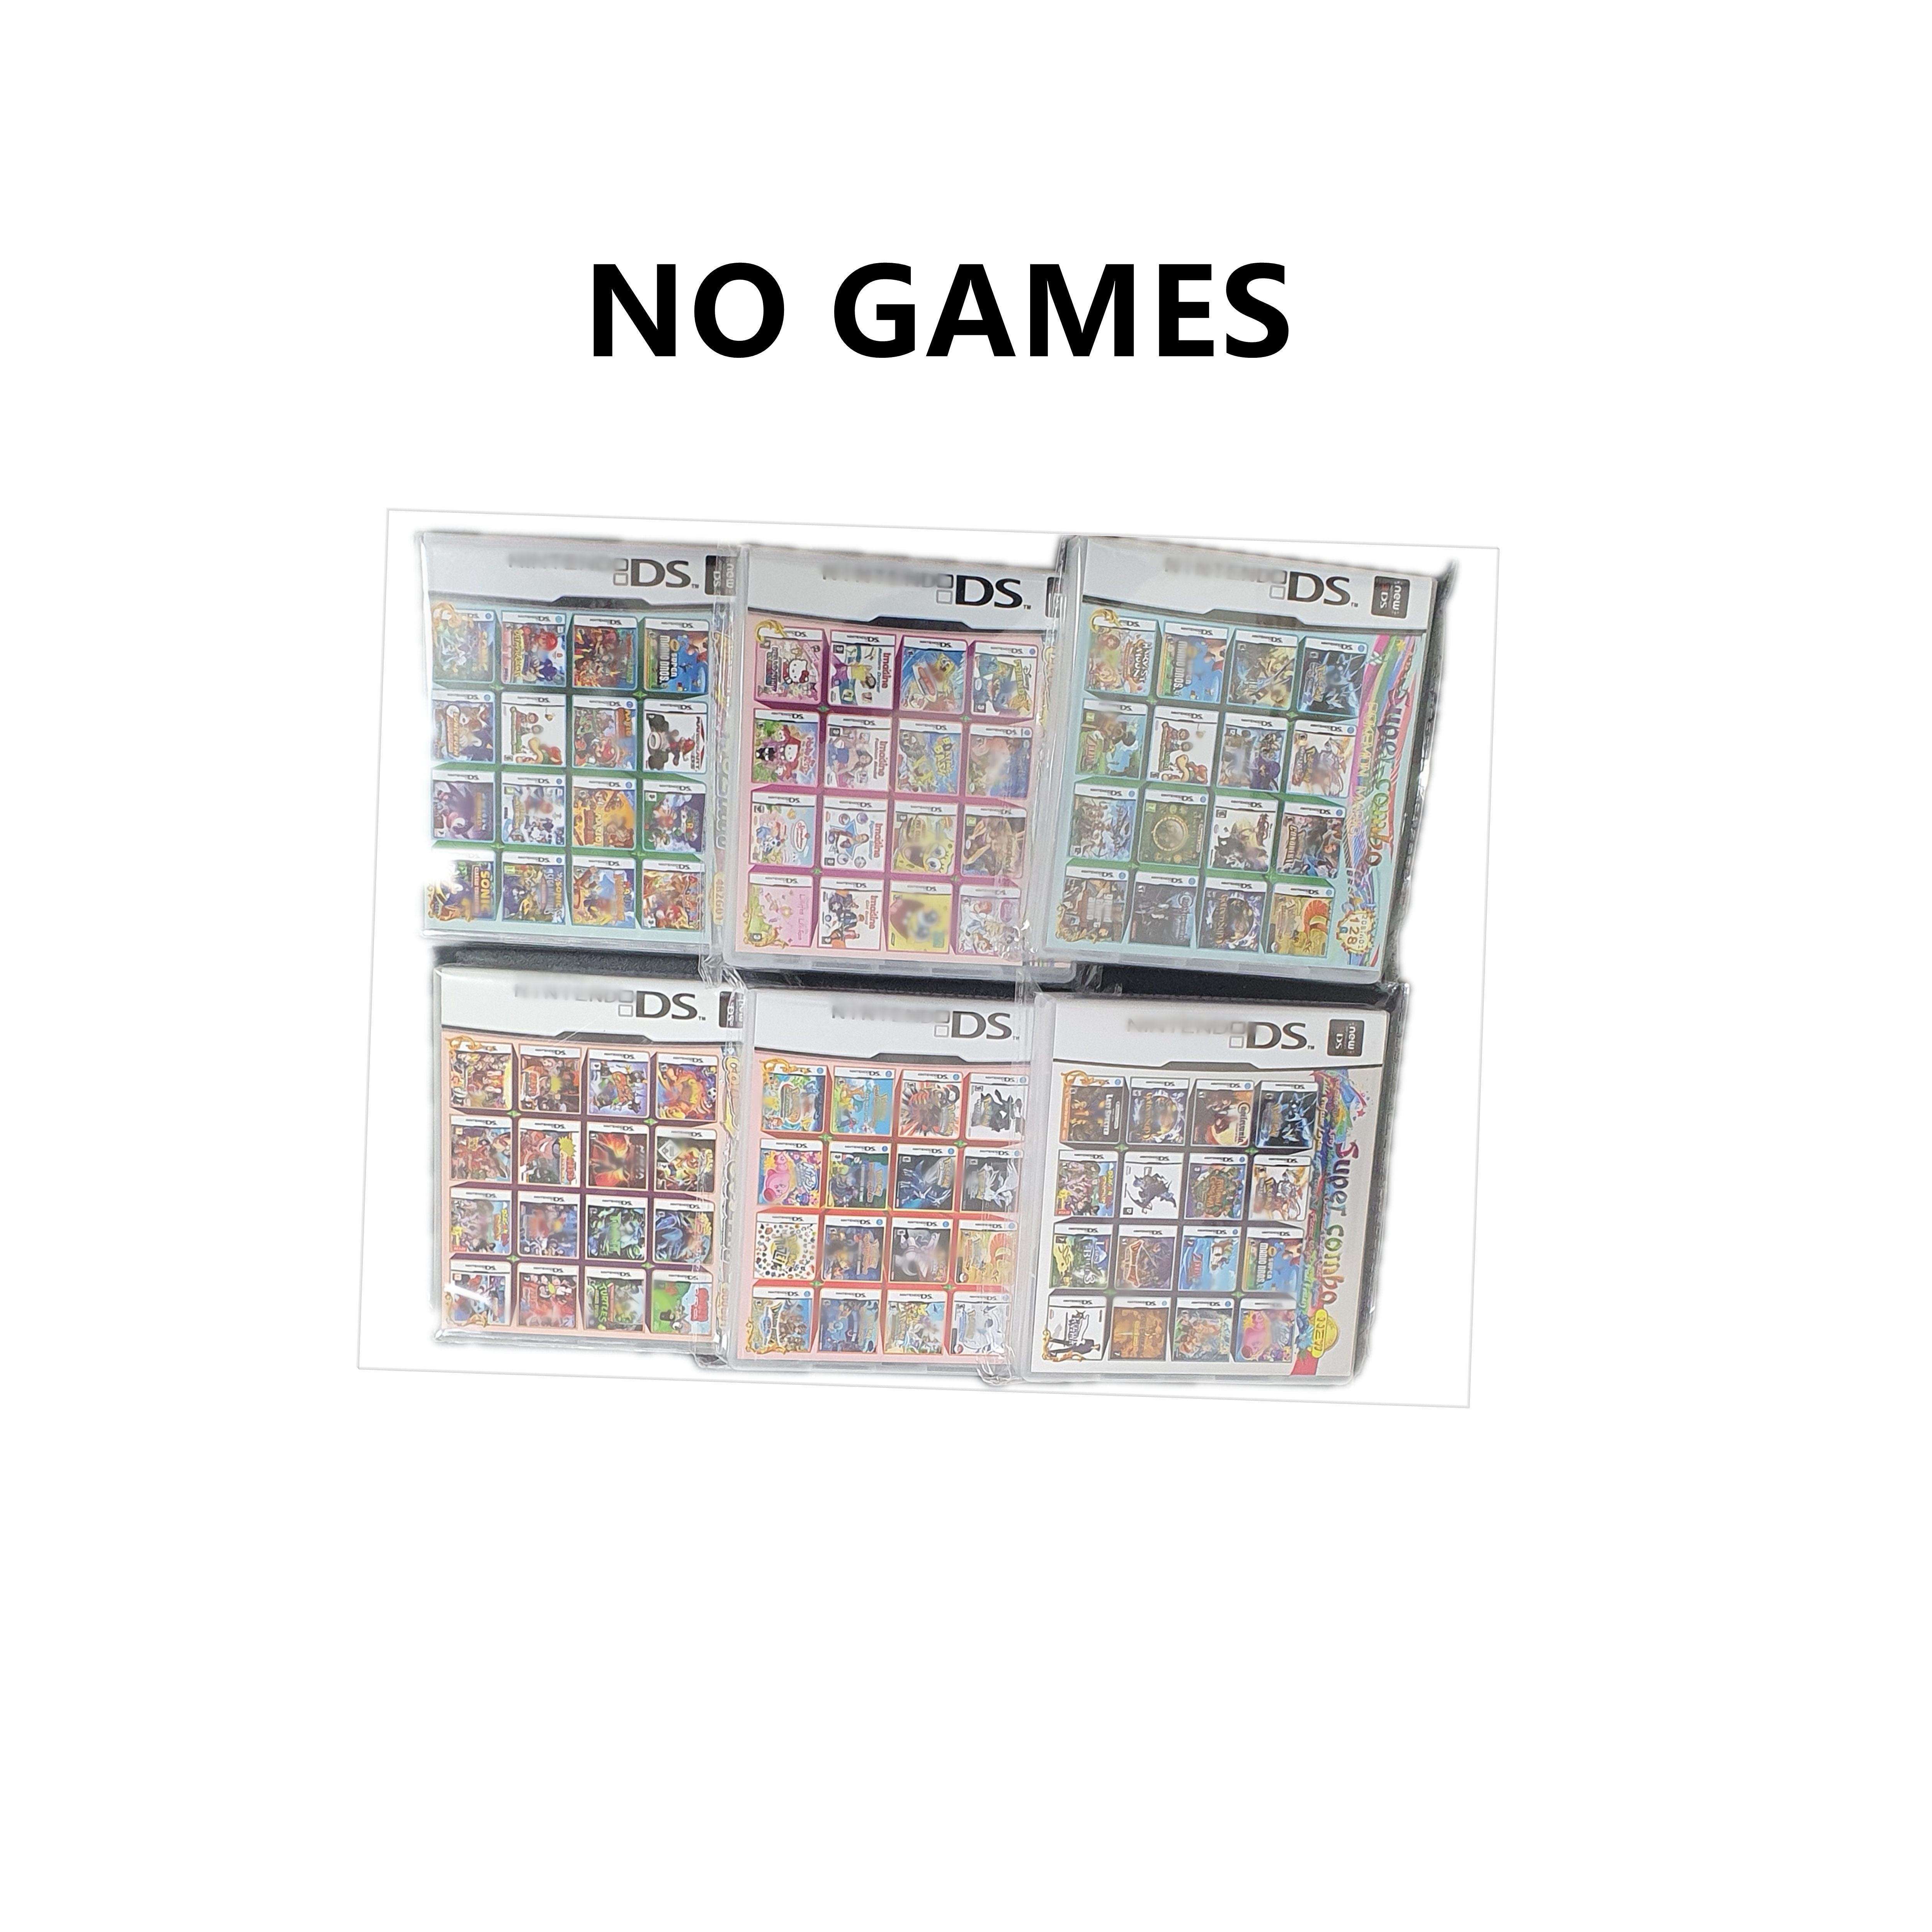 Nostálgicos-Games